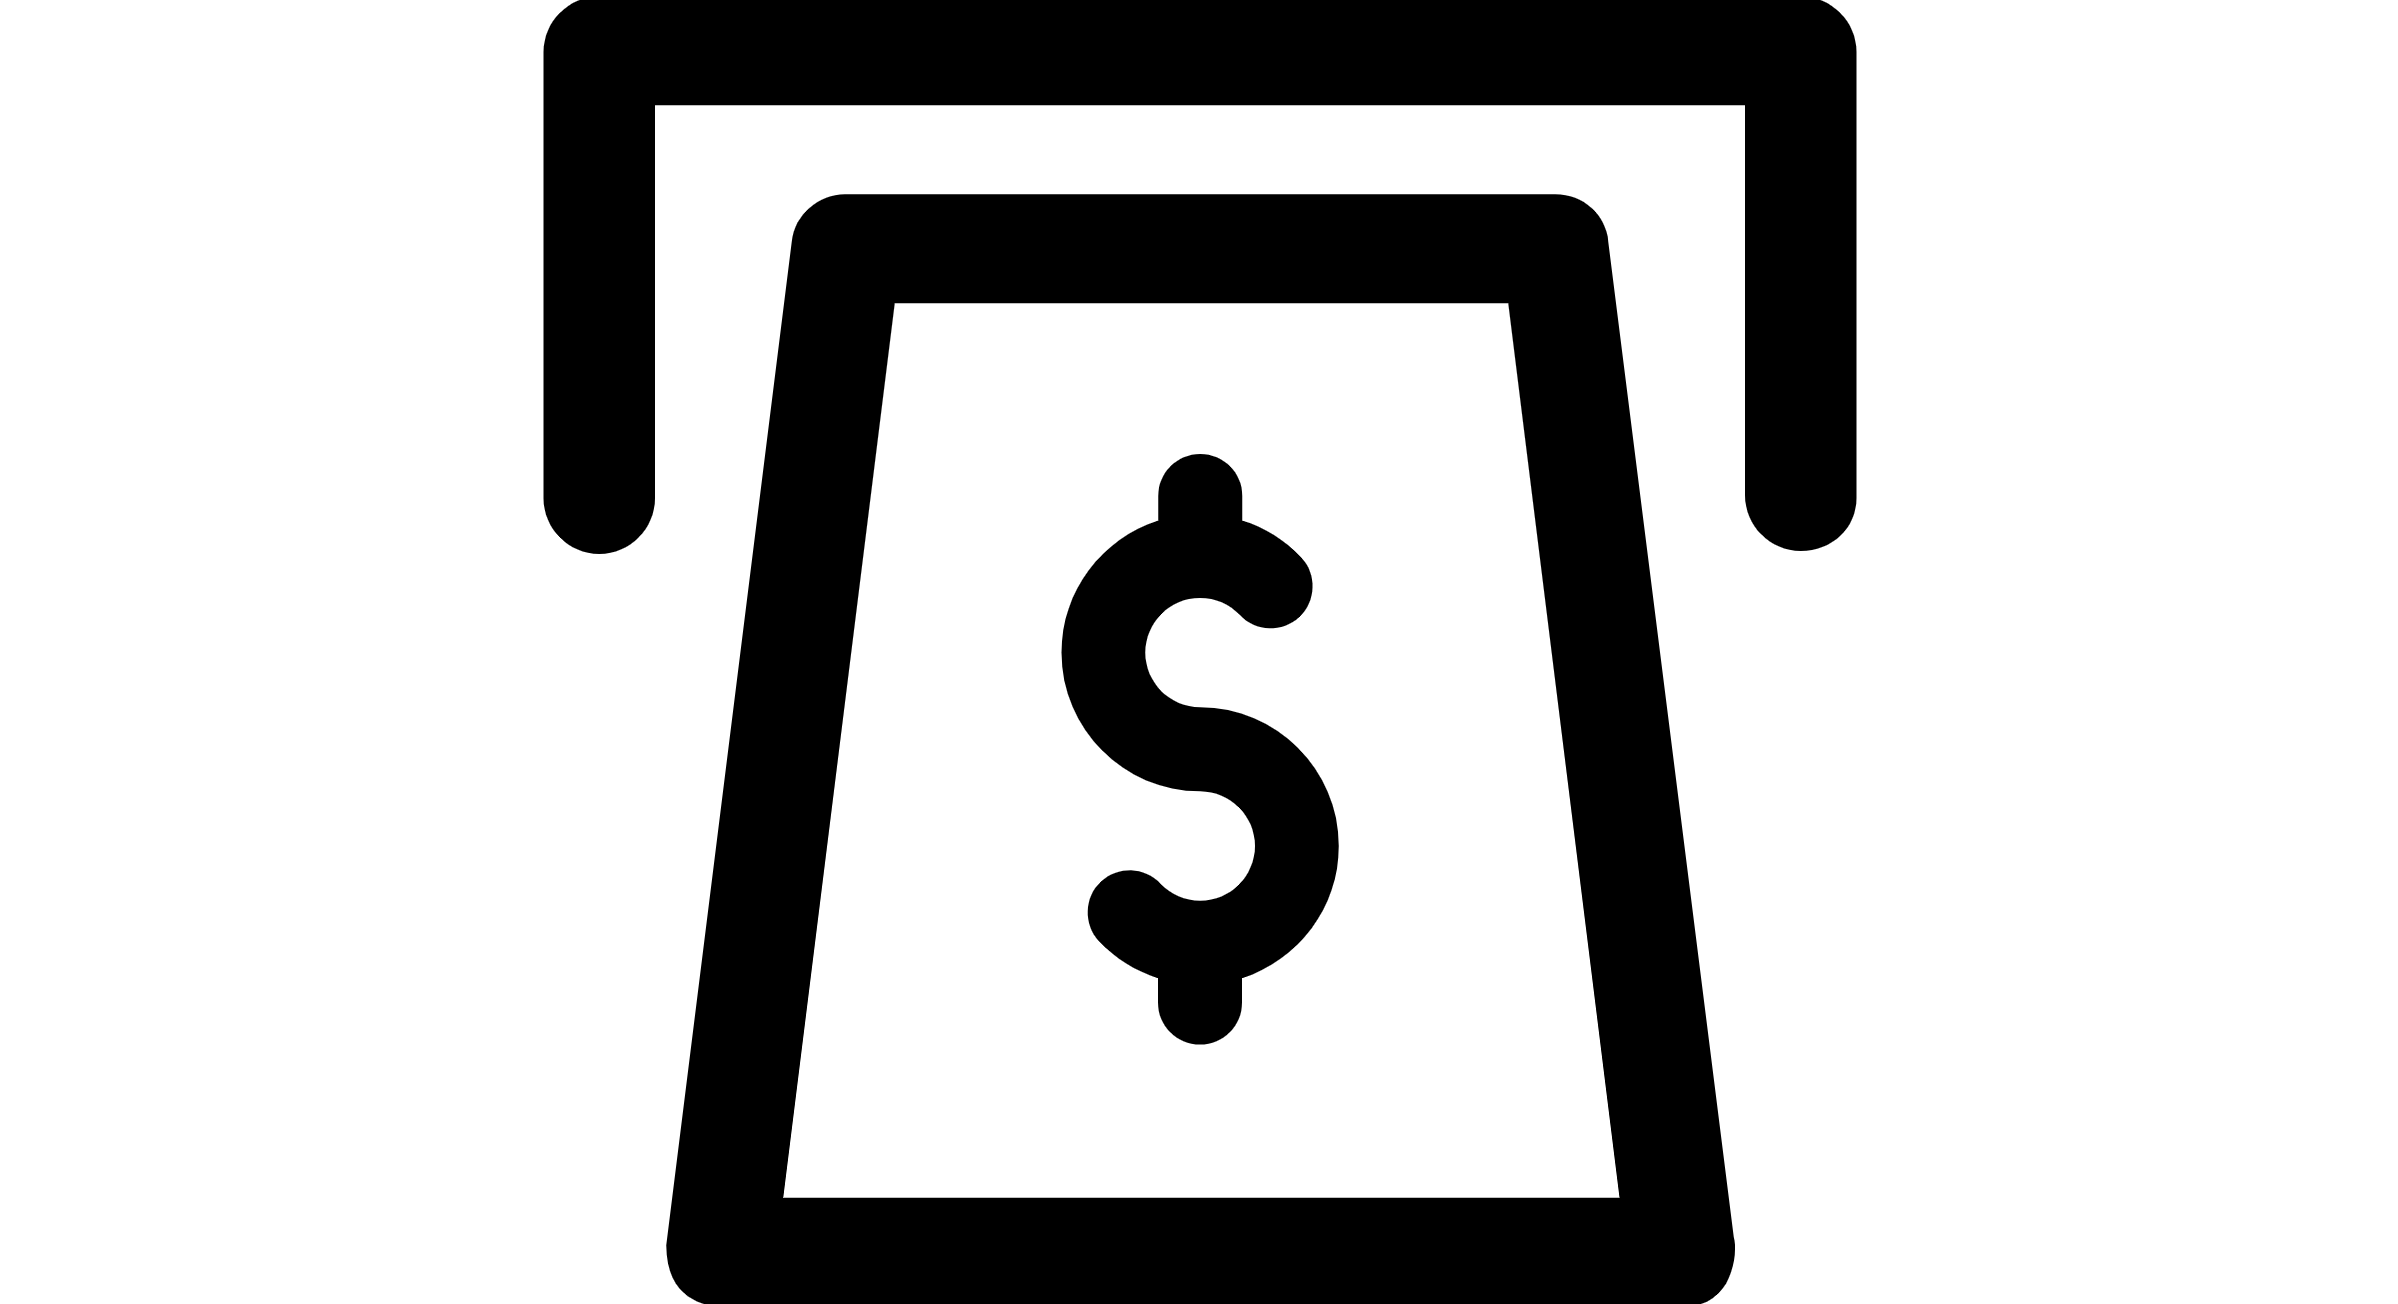 cashnetusa.com/approved offer code